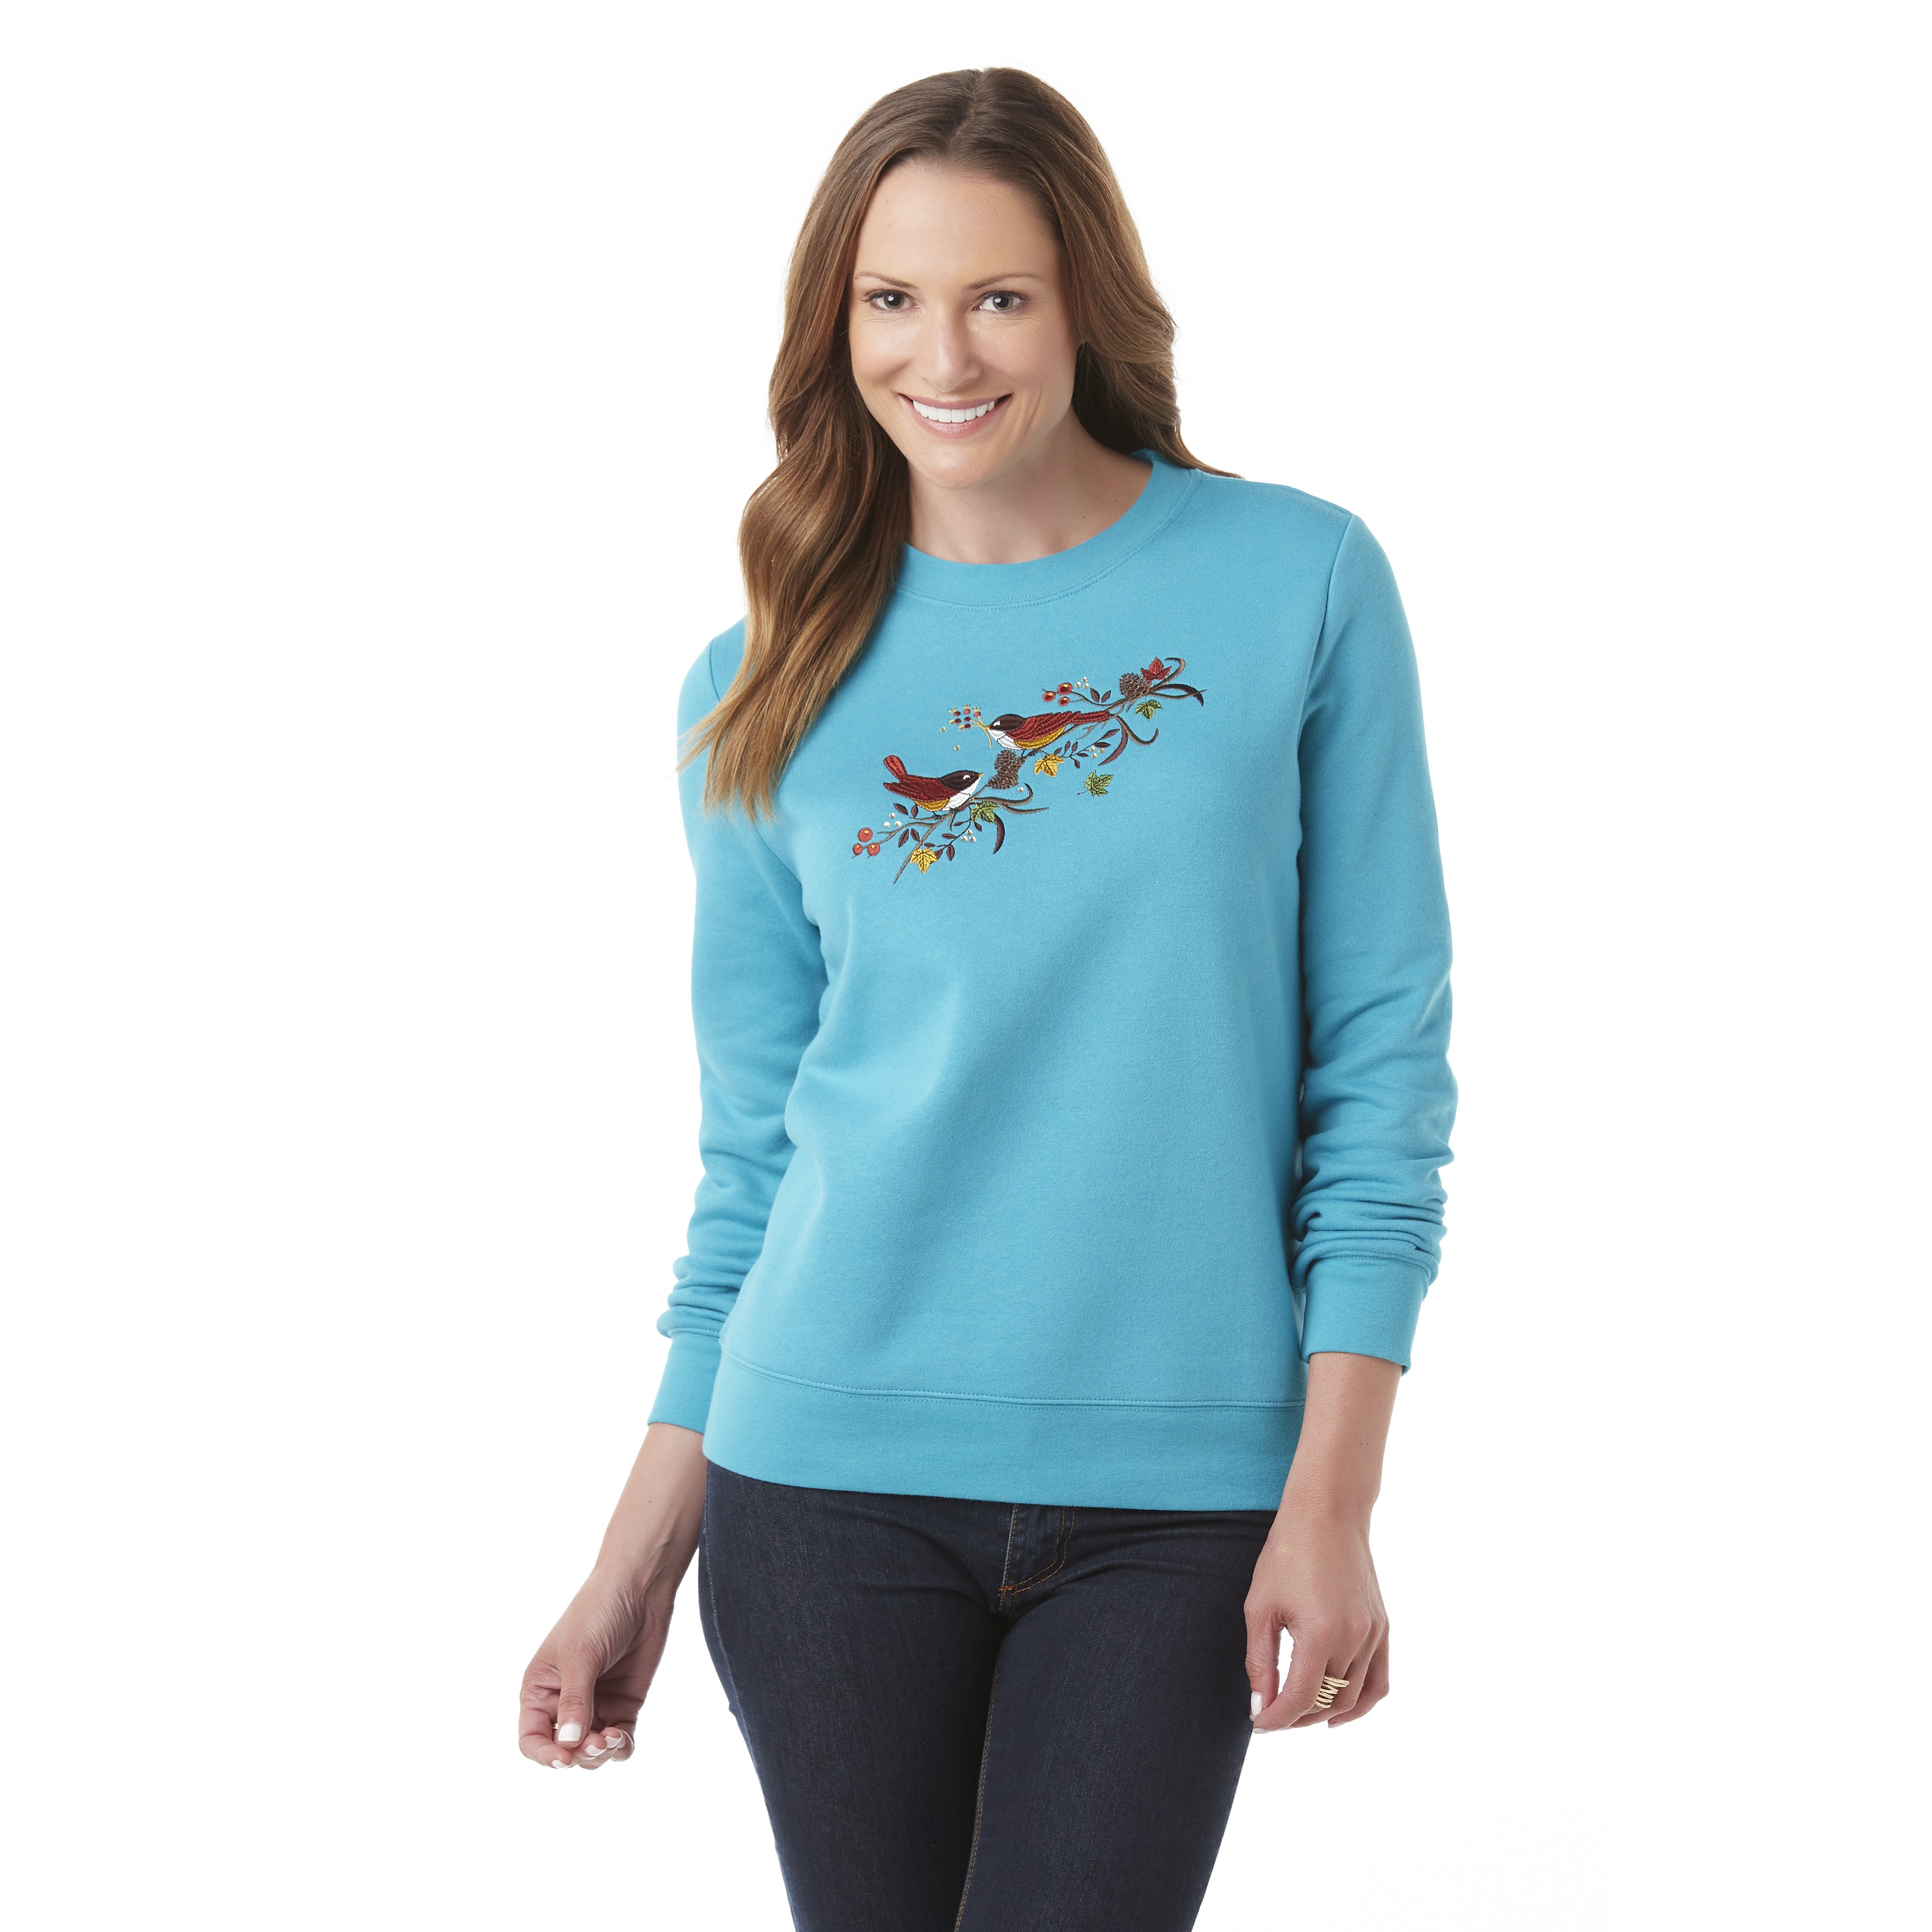 Basic Editions Women's Embroidered Sweatshirt - Birds